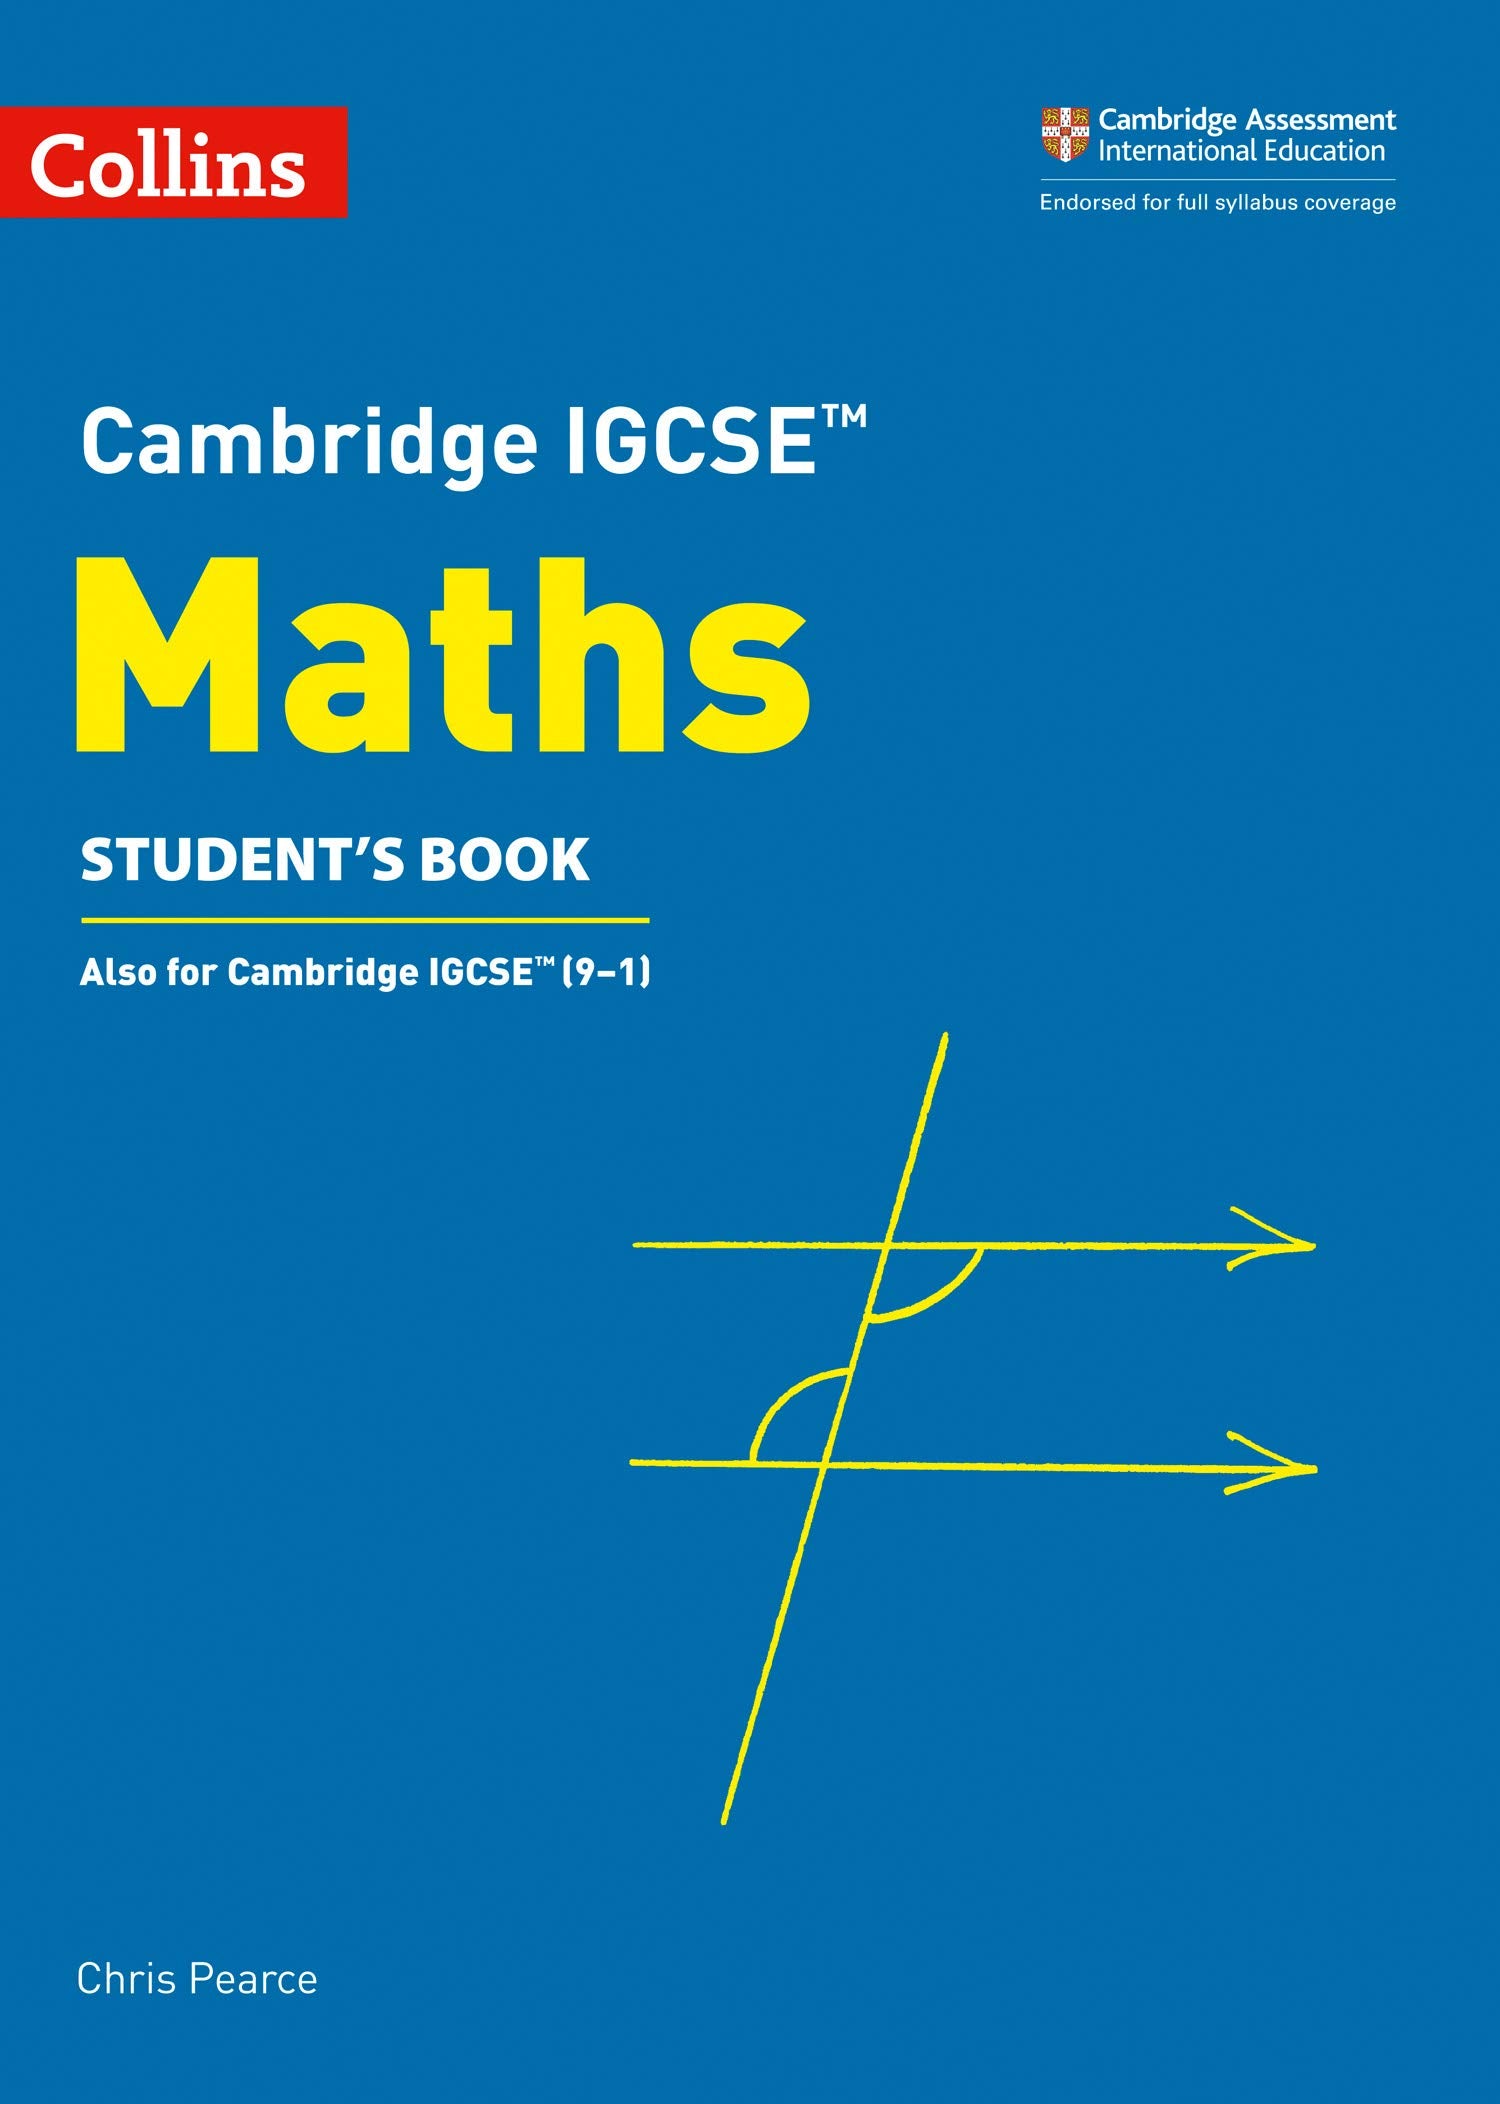 Collins - Cambridge IGCSE™ Maths Student’s Book: Third edition